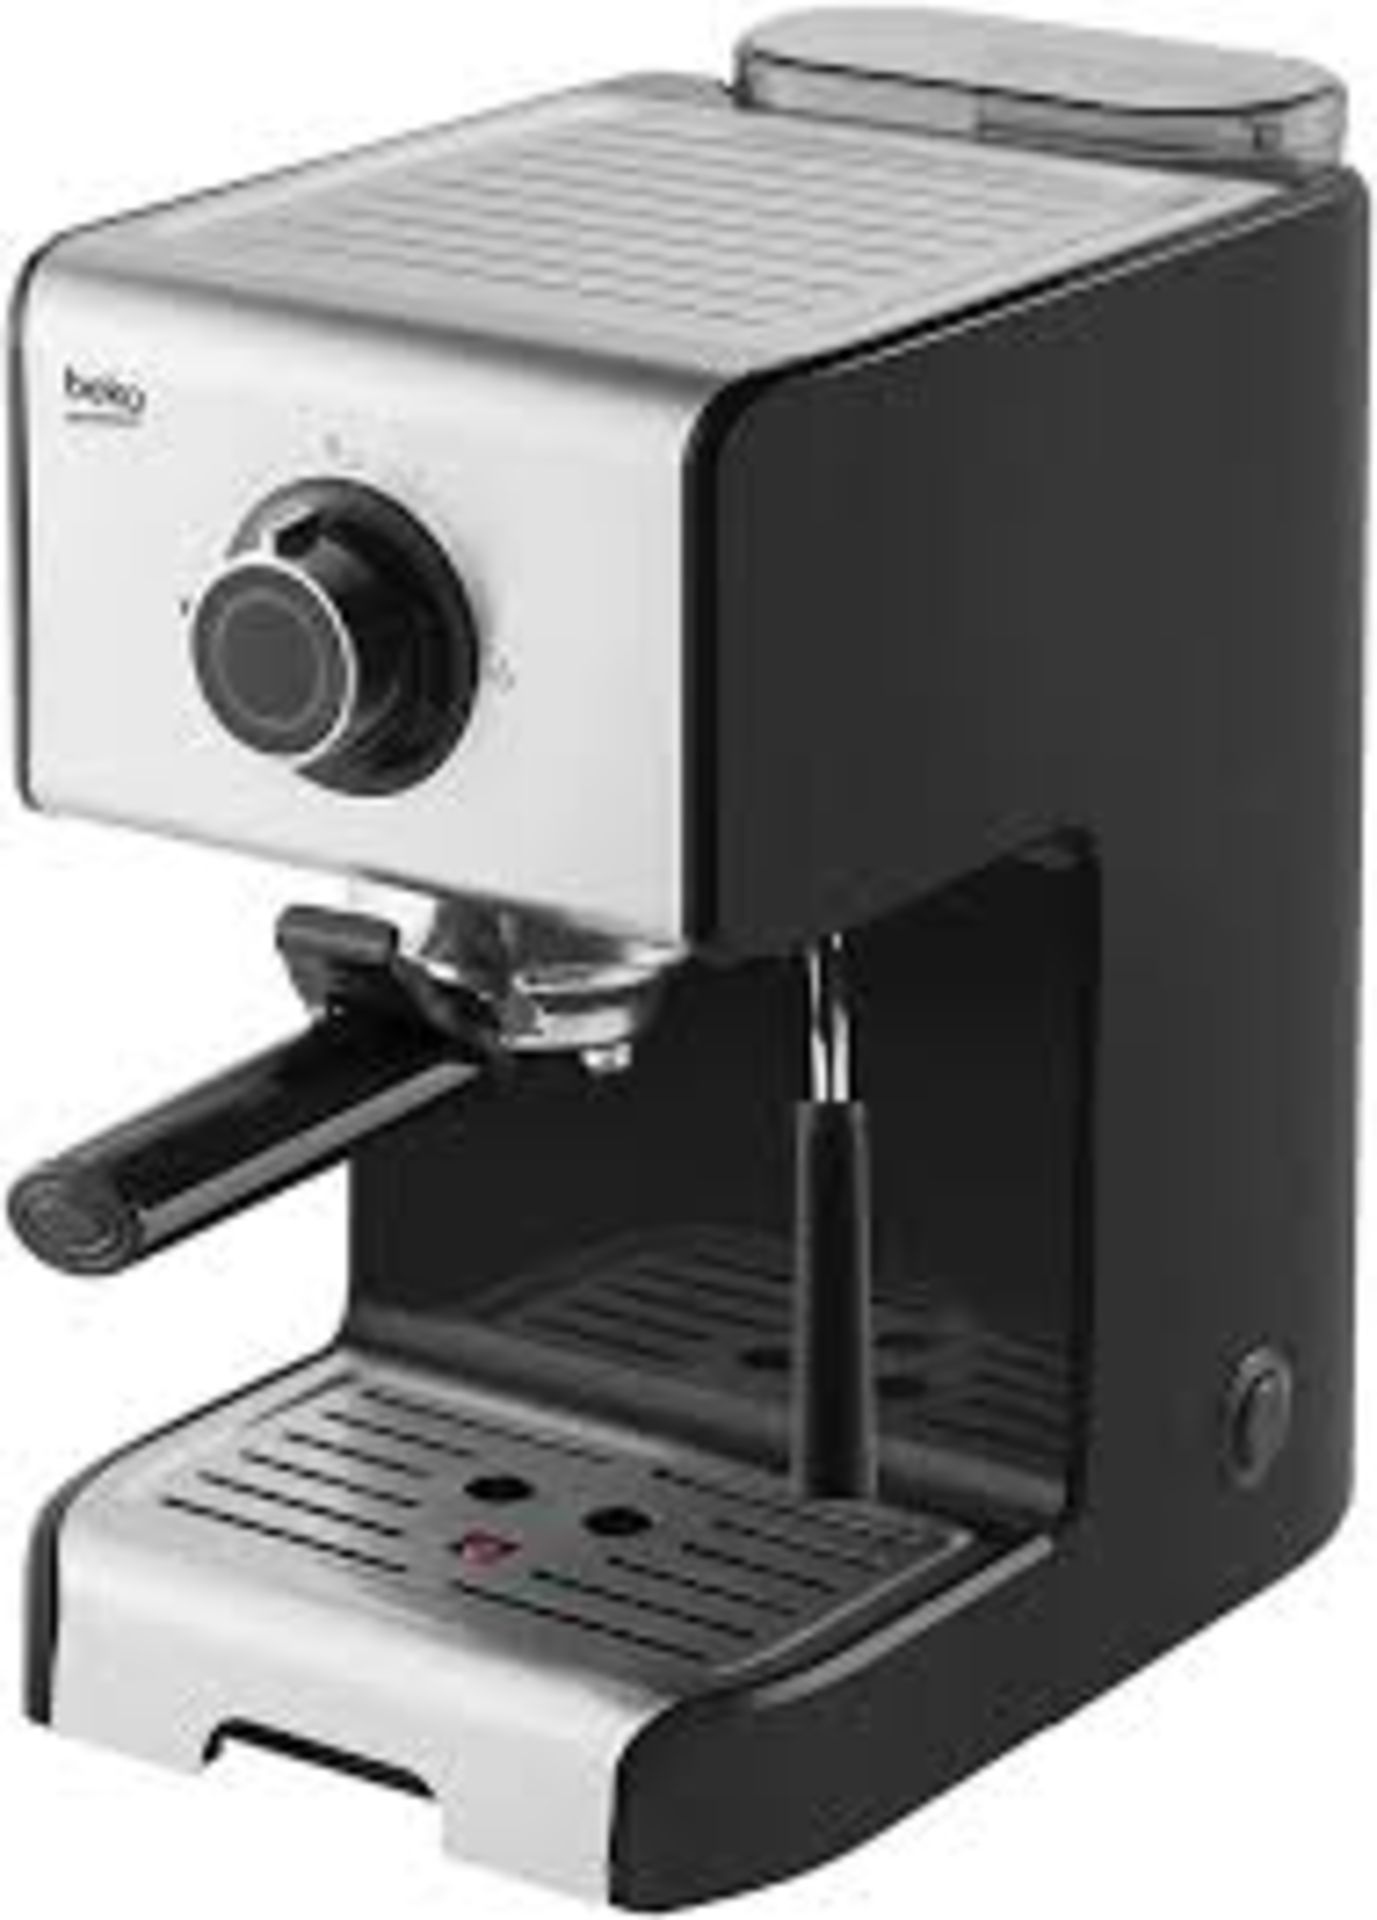 Beko CEP5152B Espresso Pump Coffee Machine,. - ER50.